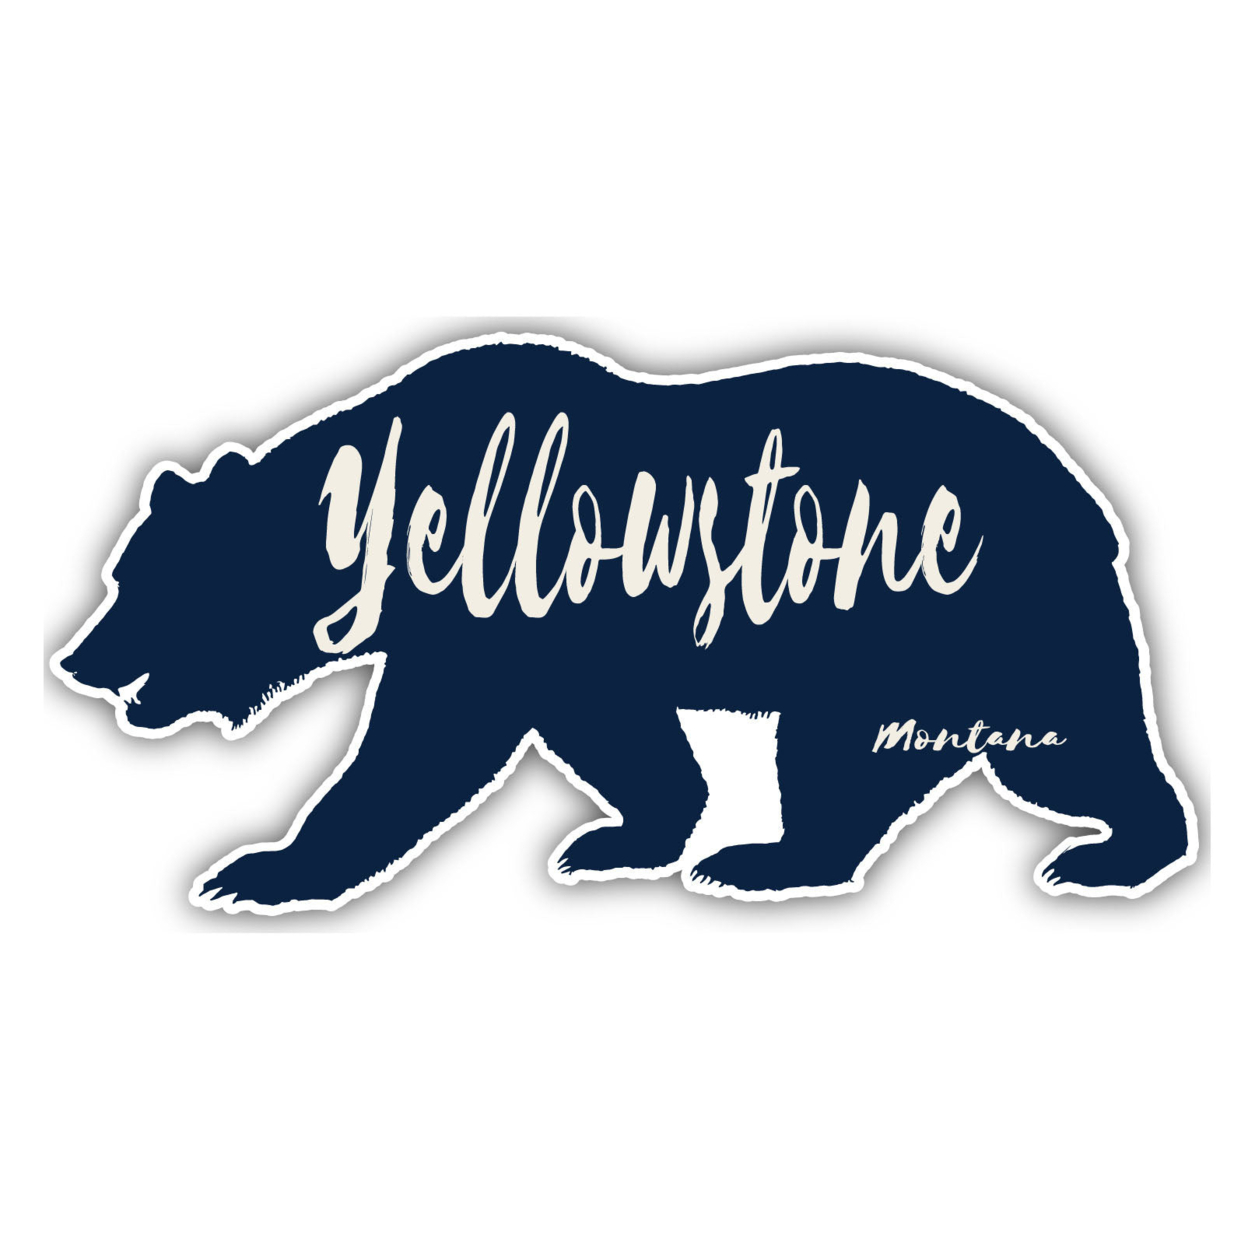 Yellowstone Montana Souvenir Decorative Stickers (Choose Theme And Size) - Single Unit, 2-Inch, Bear